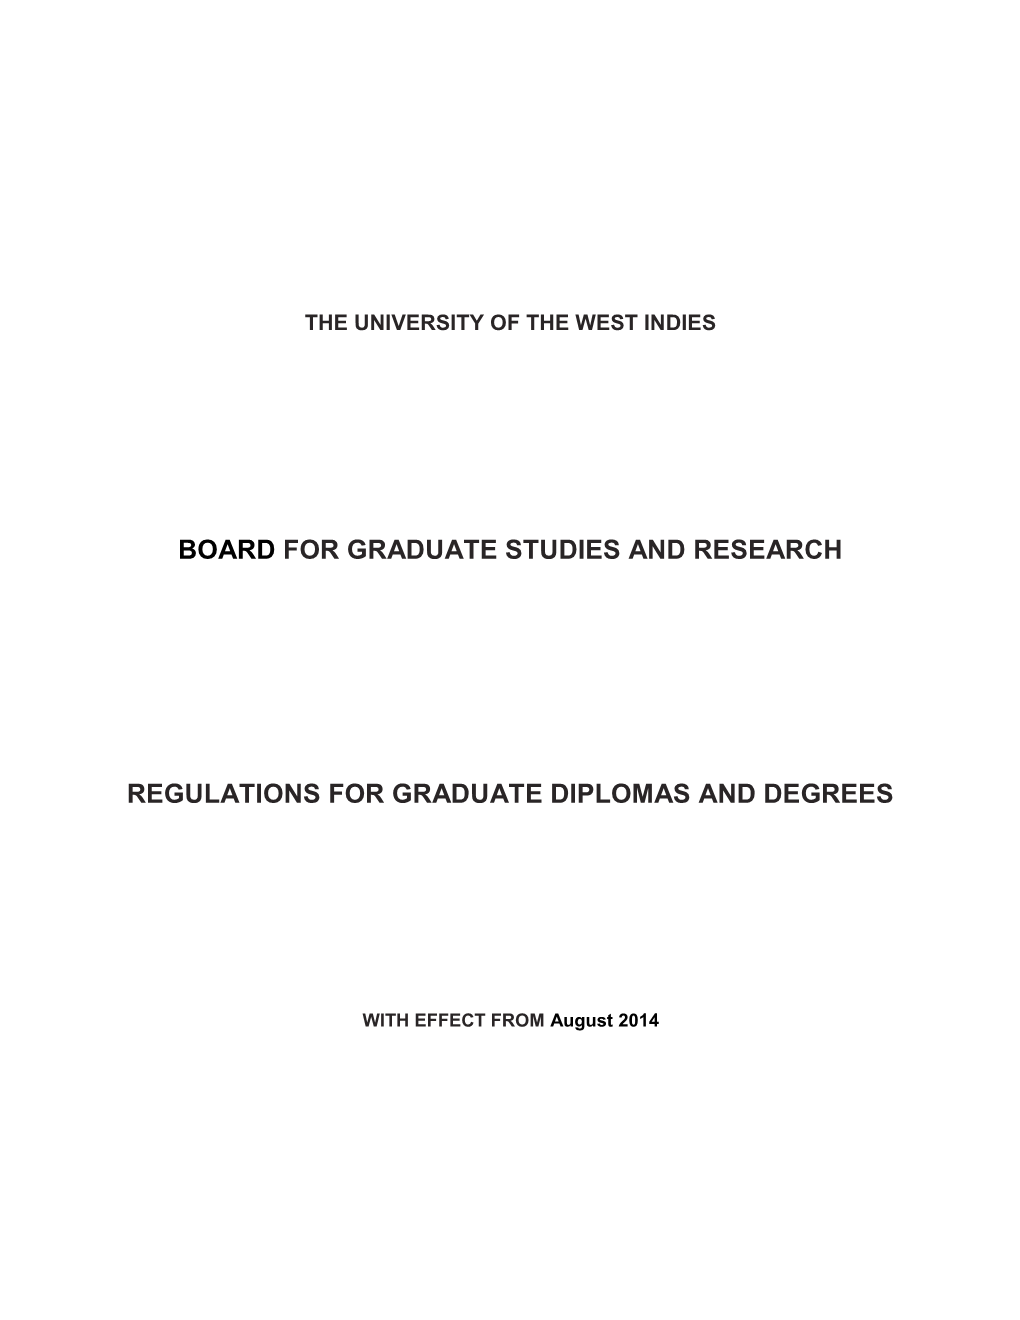 Regulations for Graduate Diplomas and Degrees